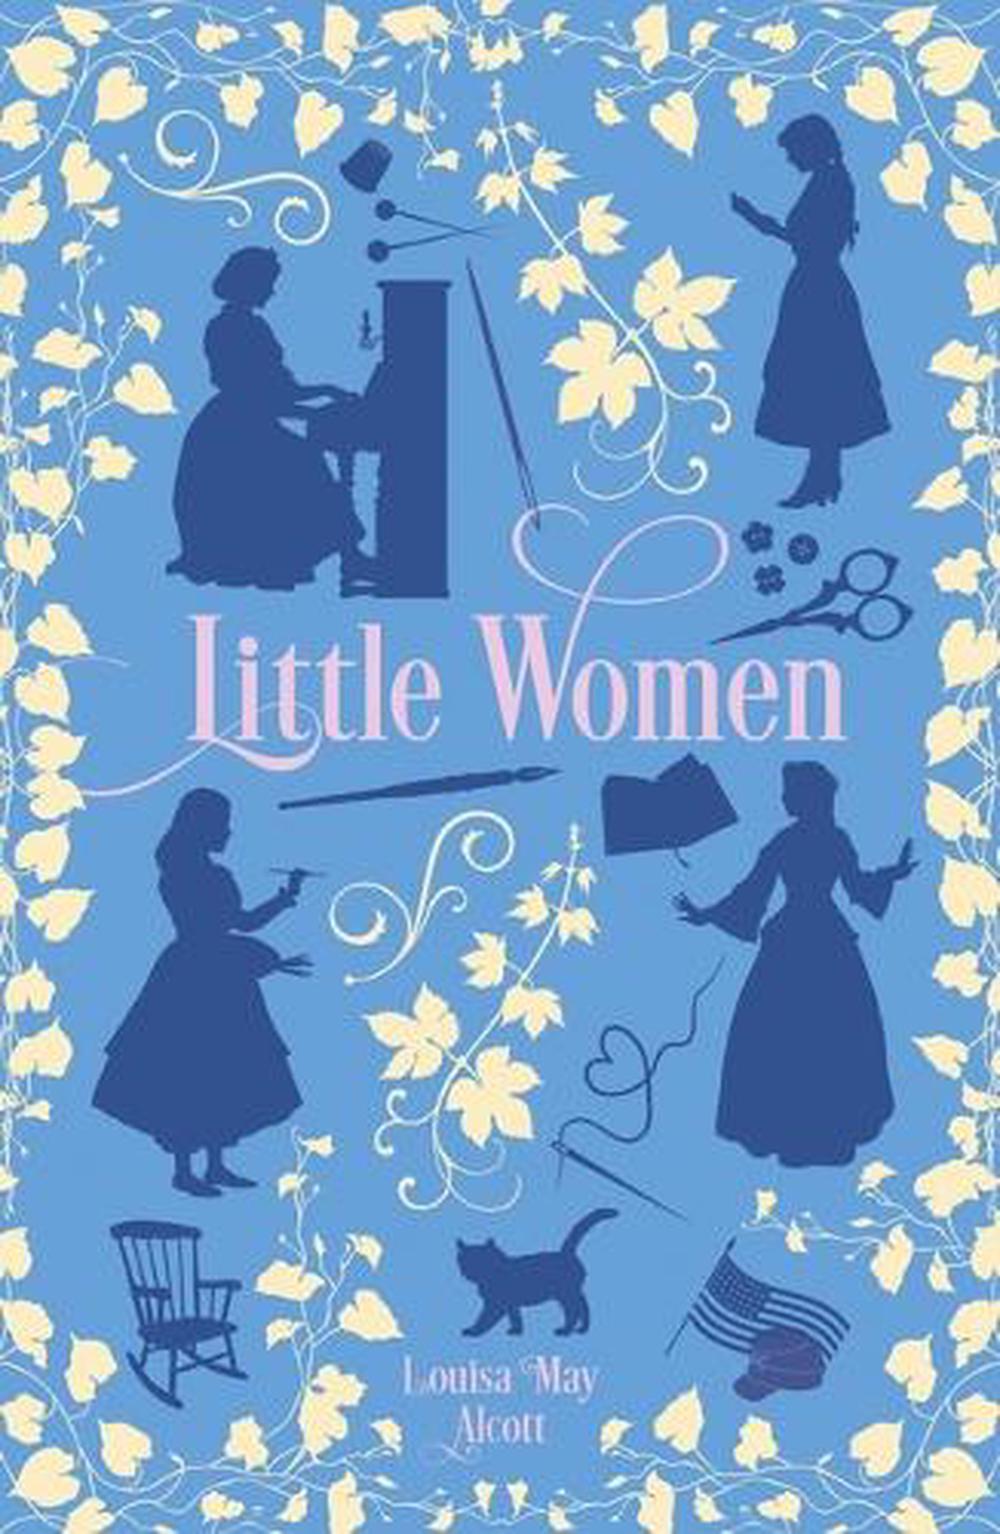 book review little women louisa may alcott